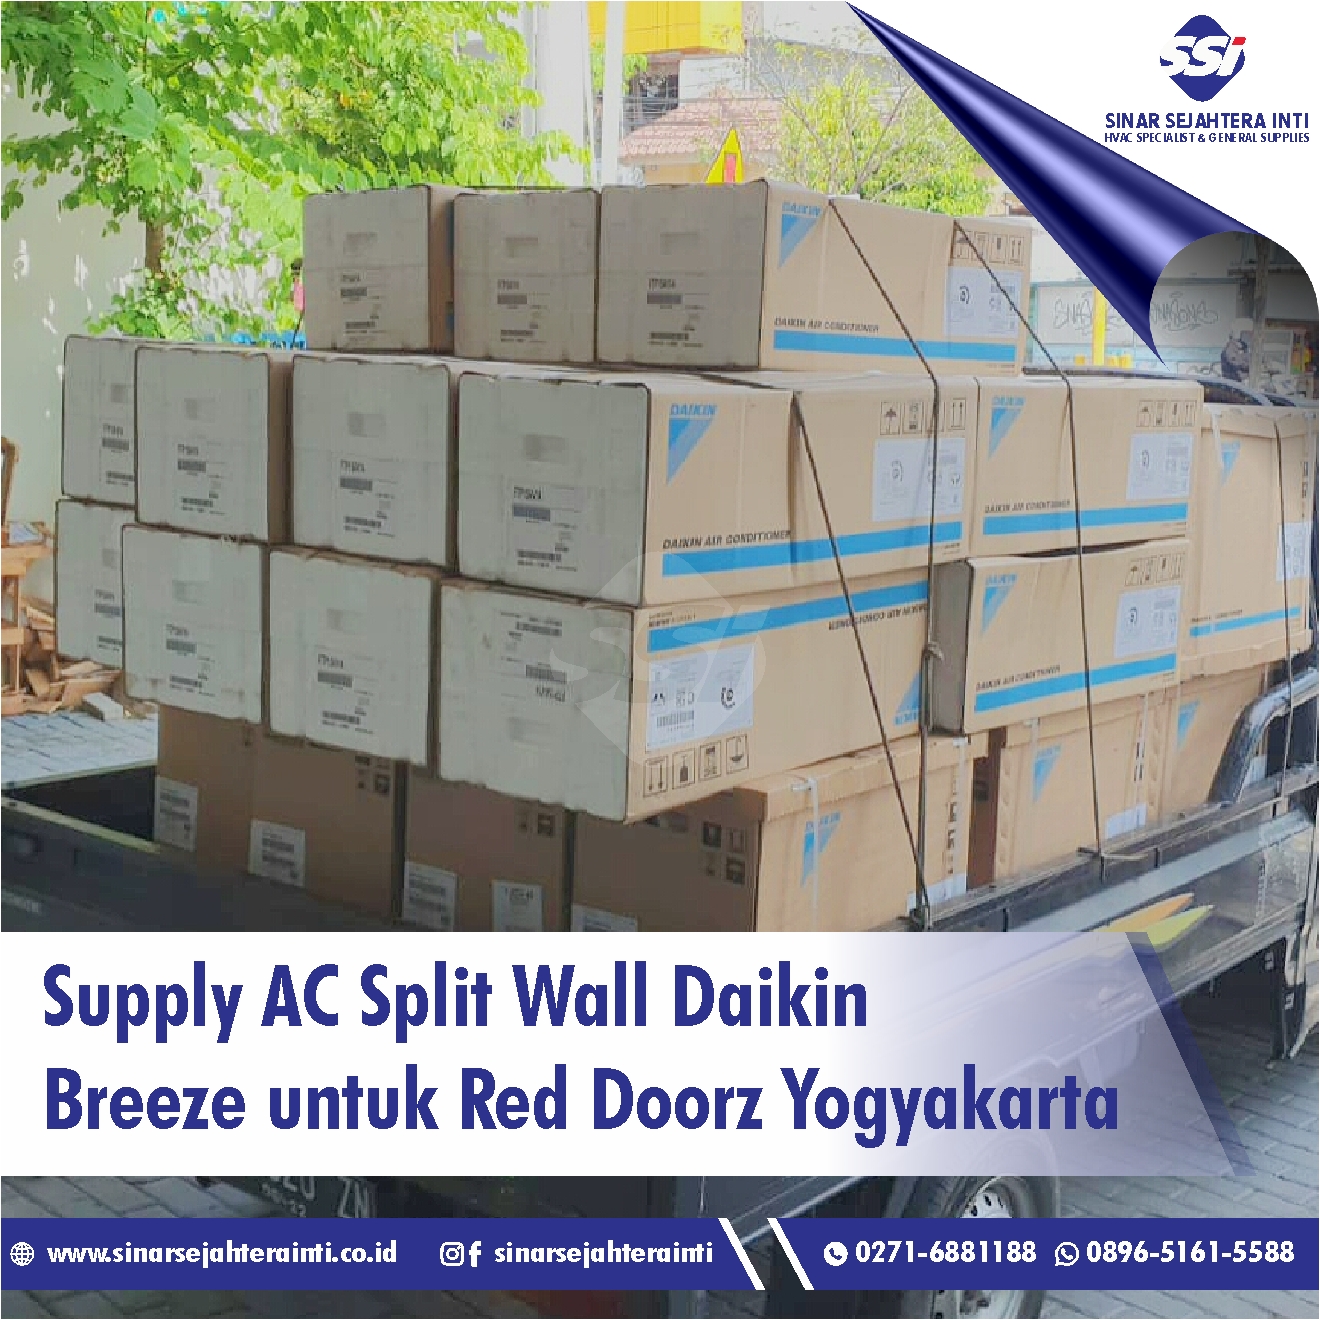 Supply AC Split Wall Daikin Breeze untuk Red Doorz Yogyakarta